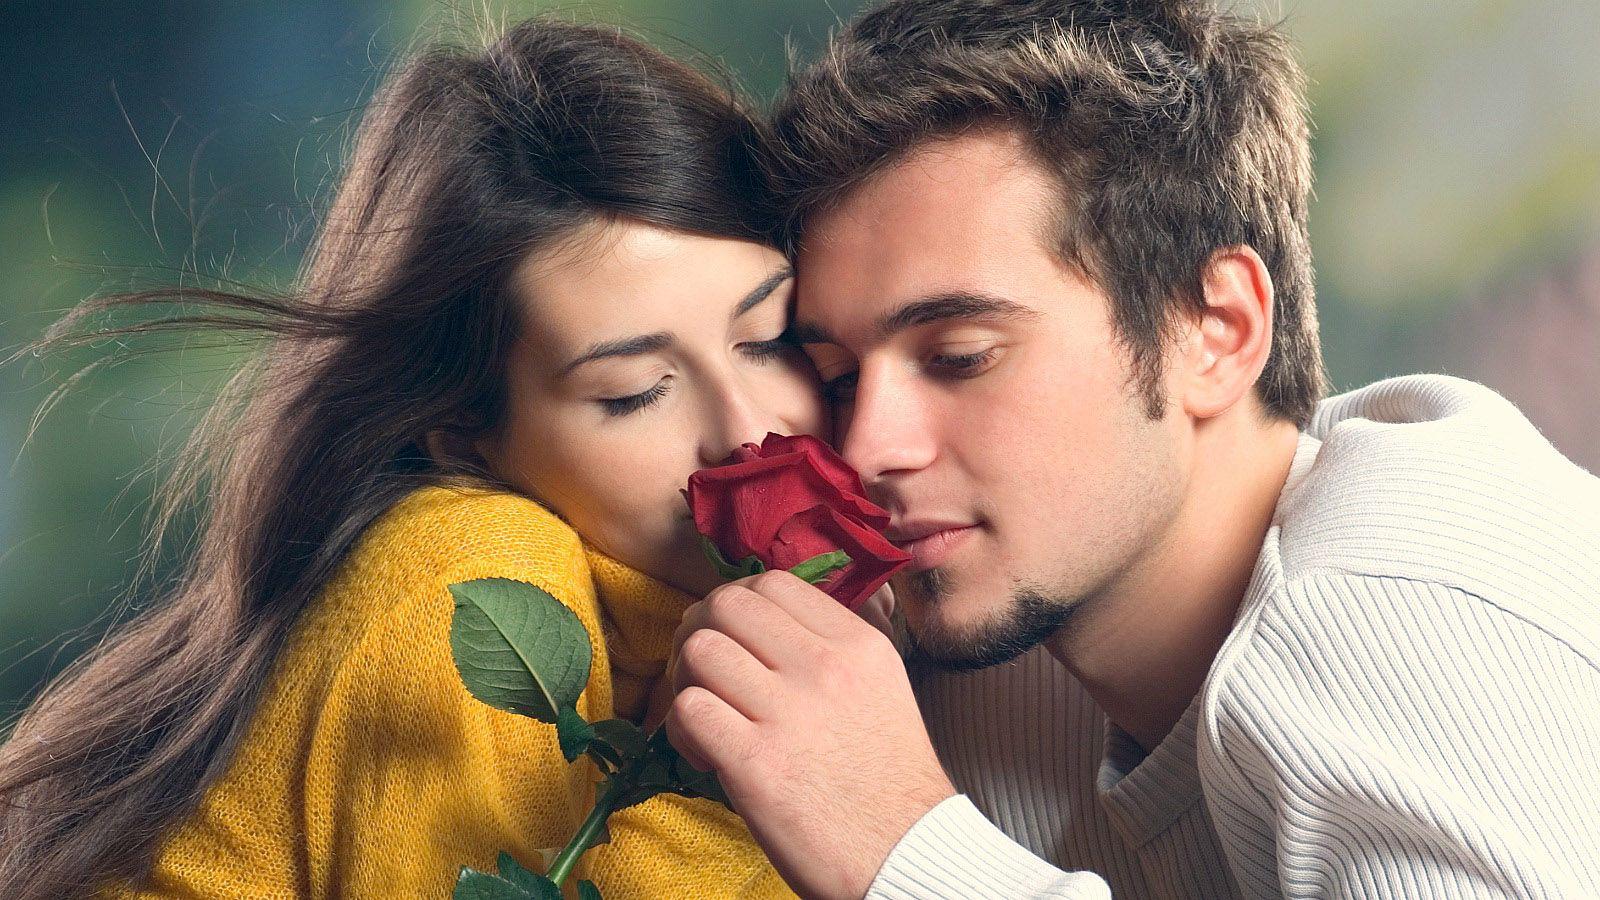 romantic photo download